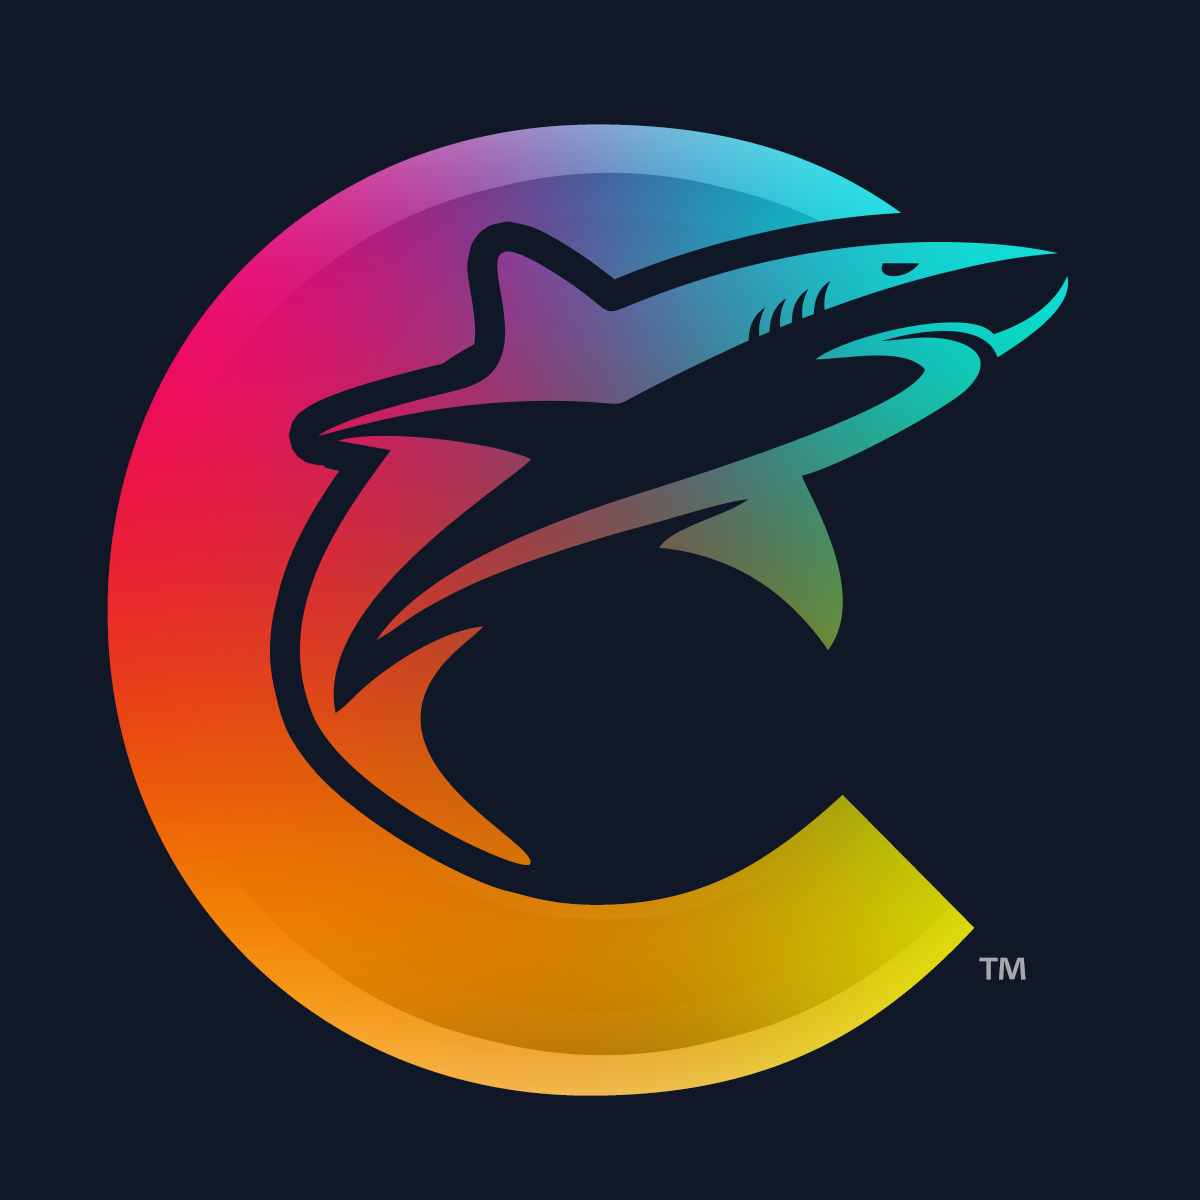 ColorShark logo on dark background